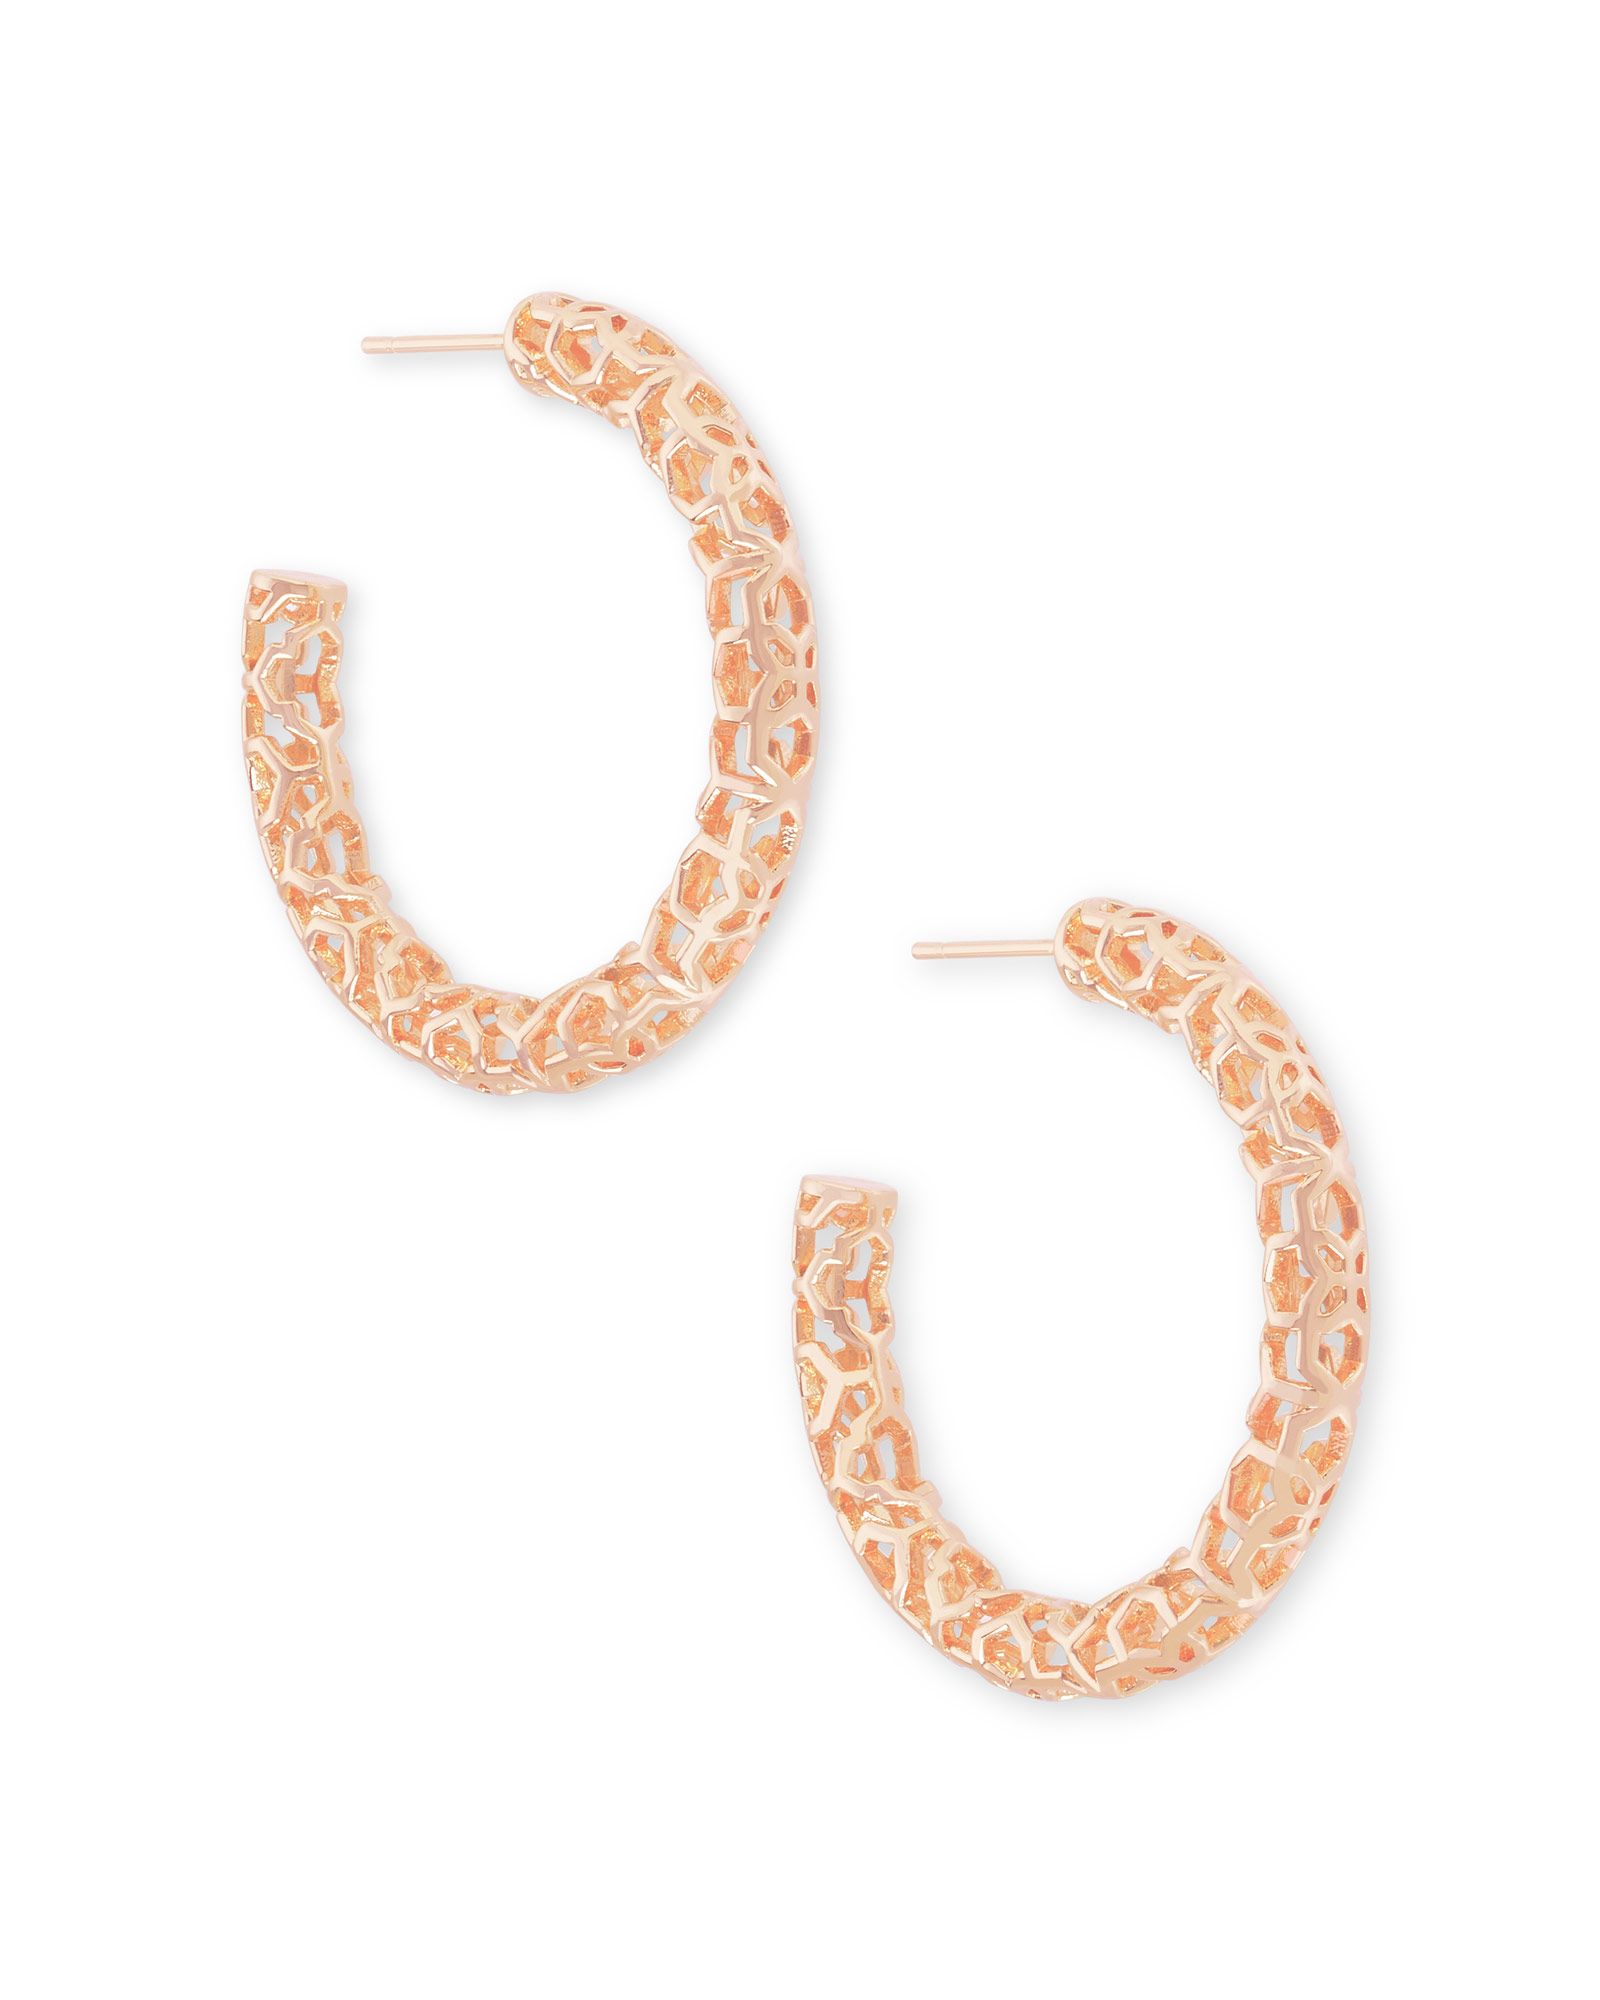 Maggie Small Hoop Earrings in Rose Gold Filigree | Kendra Scott | Kendra Scott